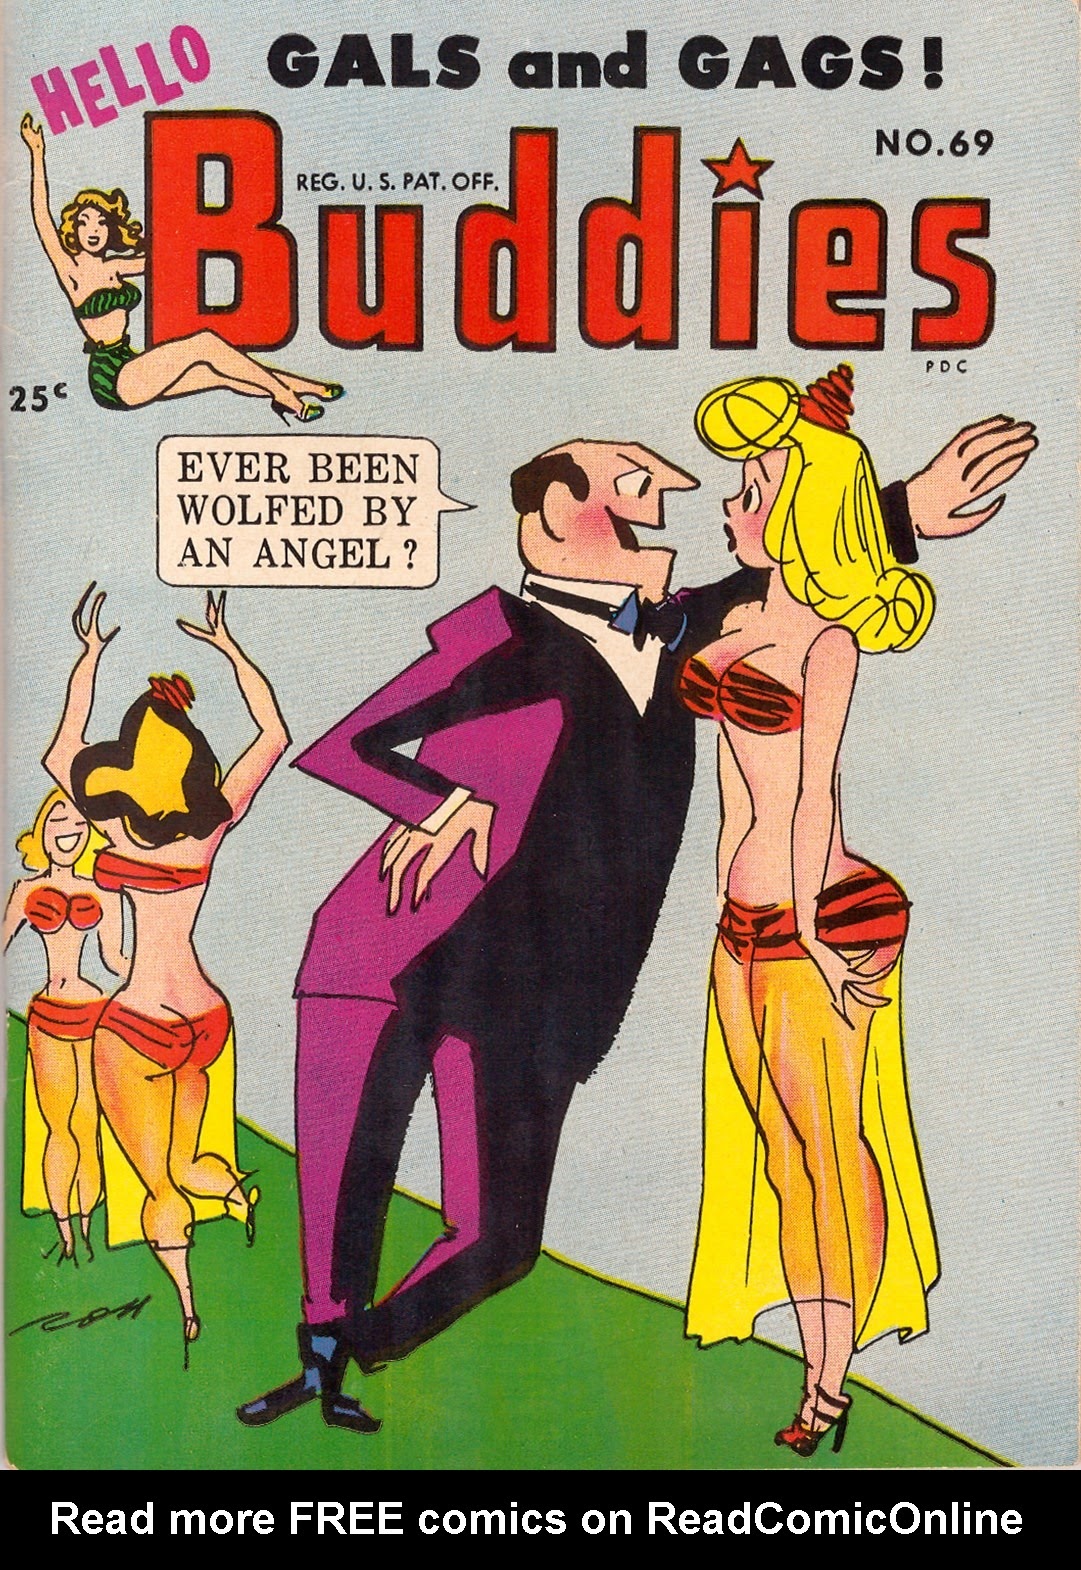 Read online Hello Buddies comic -  Issue #69 - 1